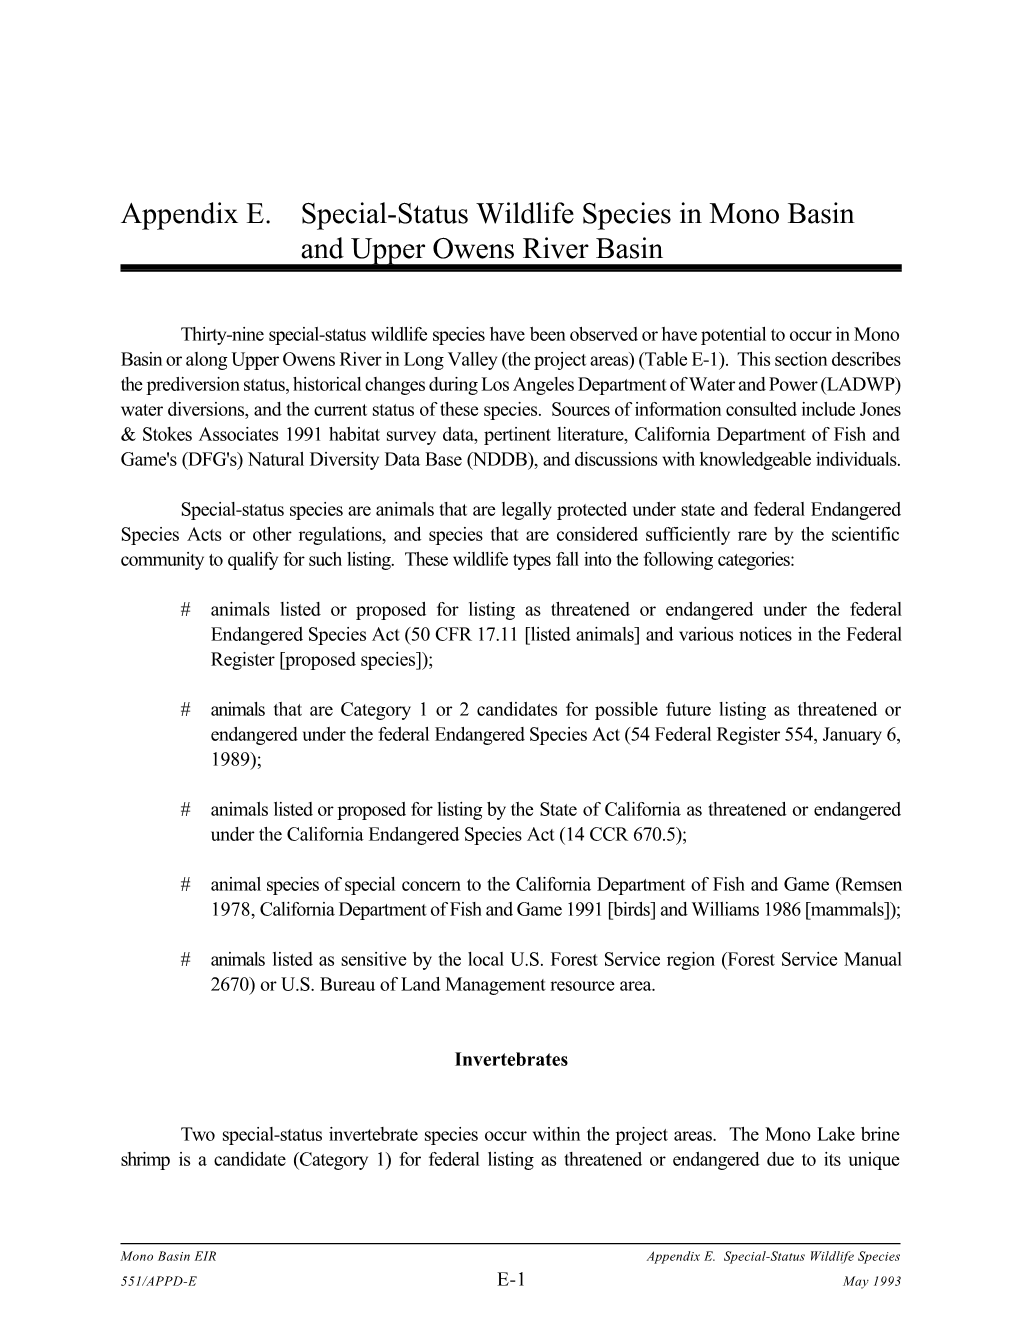 Appendix E. Special-Status Wildlife Species in Mono Basin and Upper Owens River Basin